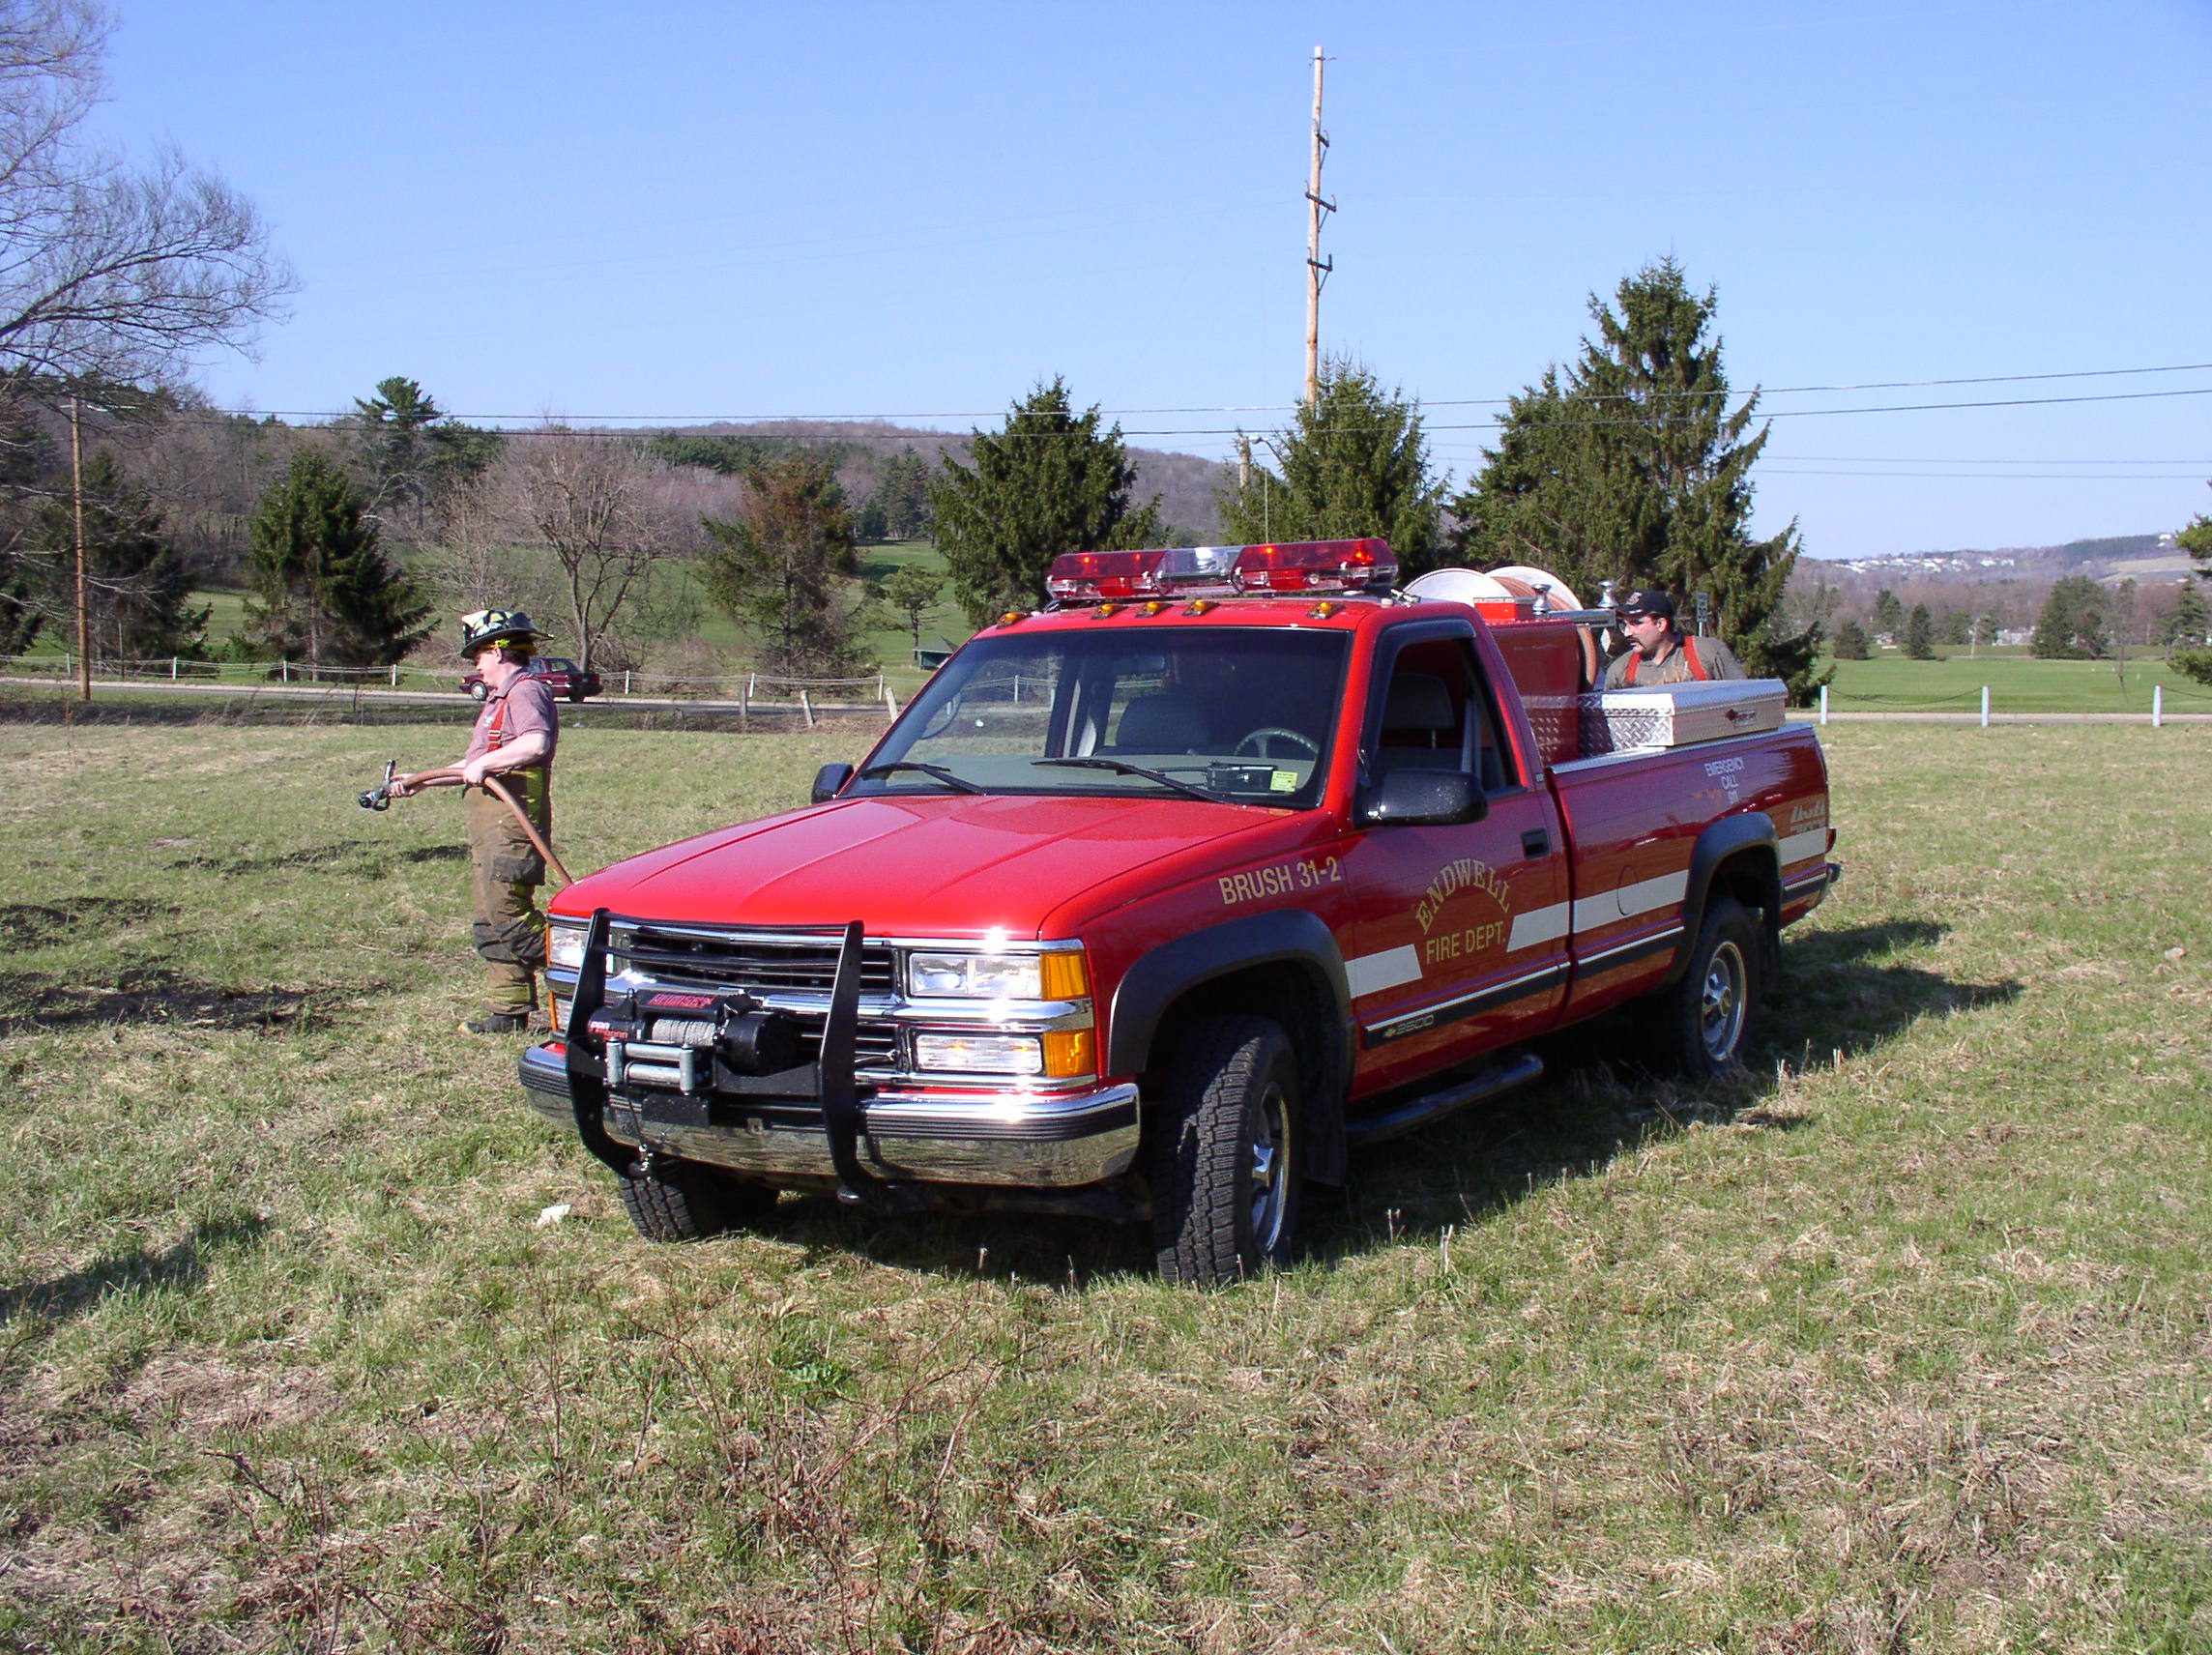 04-12-03  Response - Fire - Brush Fire